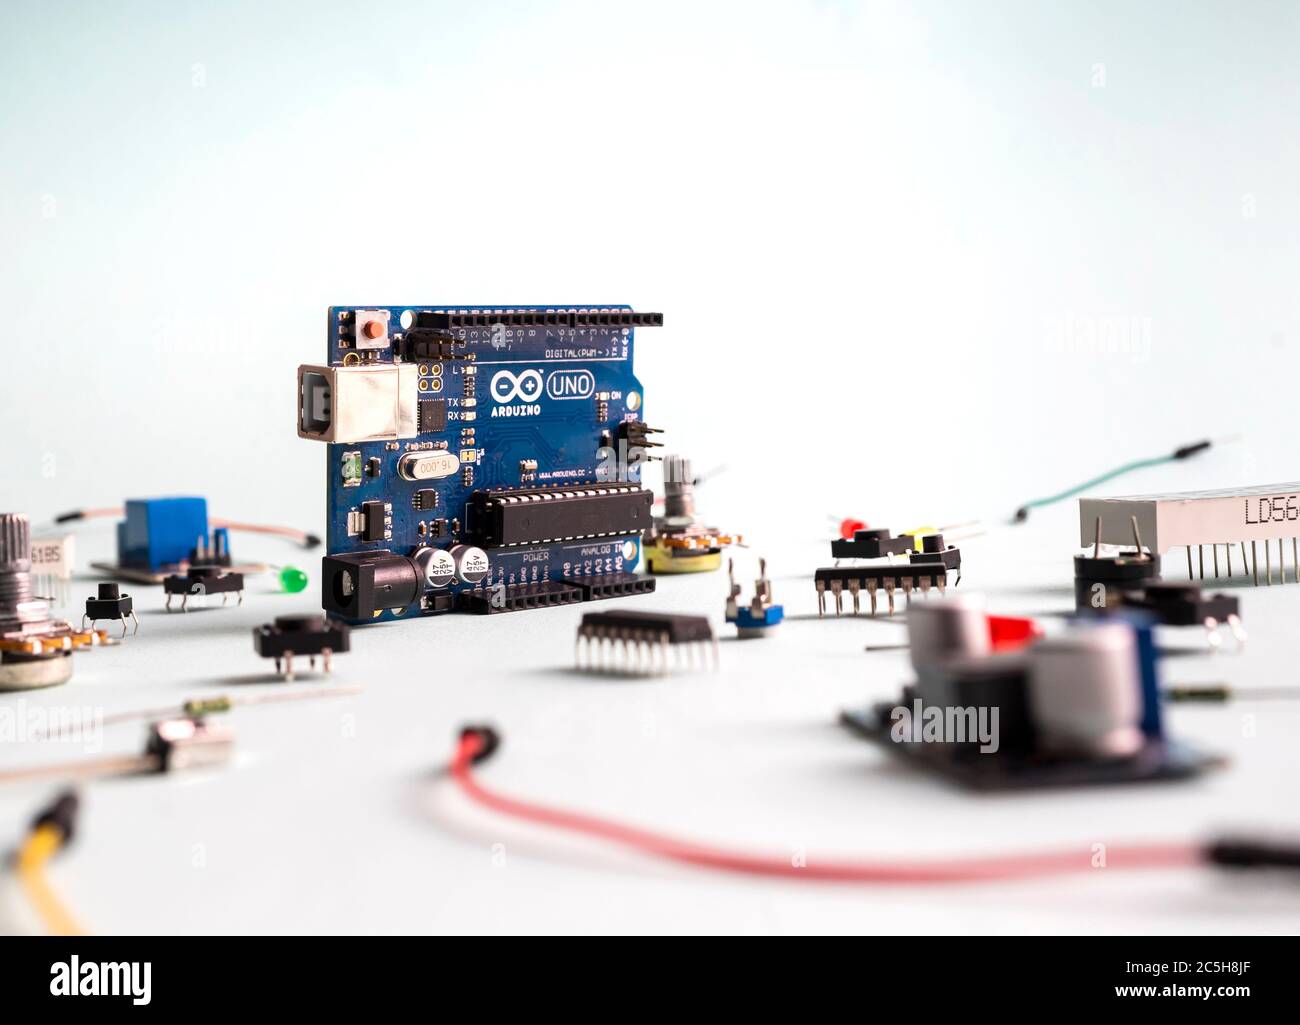 Sankt-Petersburg, Russia - February 28, 2020: Arduino UNO board on light background. Micro eleectronics arduino DIY components. Microcontrollers, boar Stock Photo